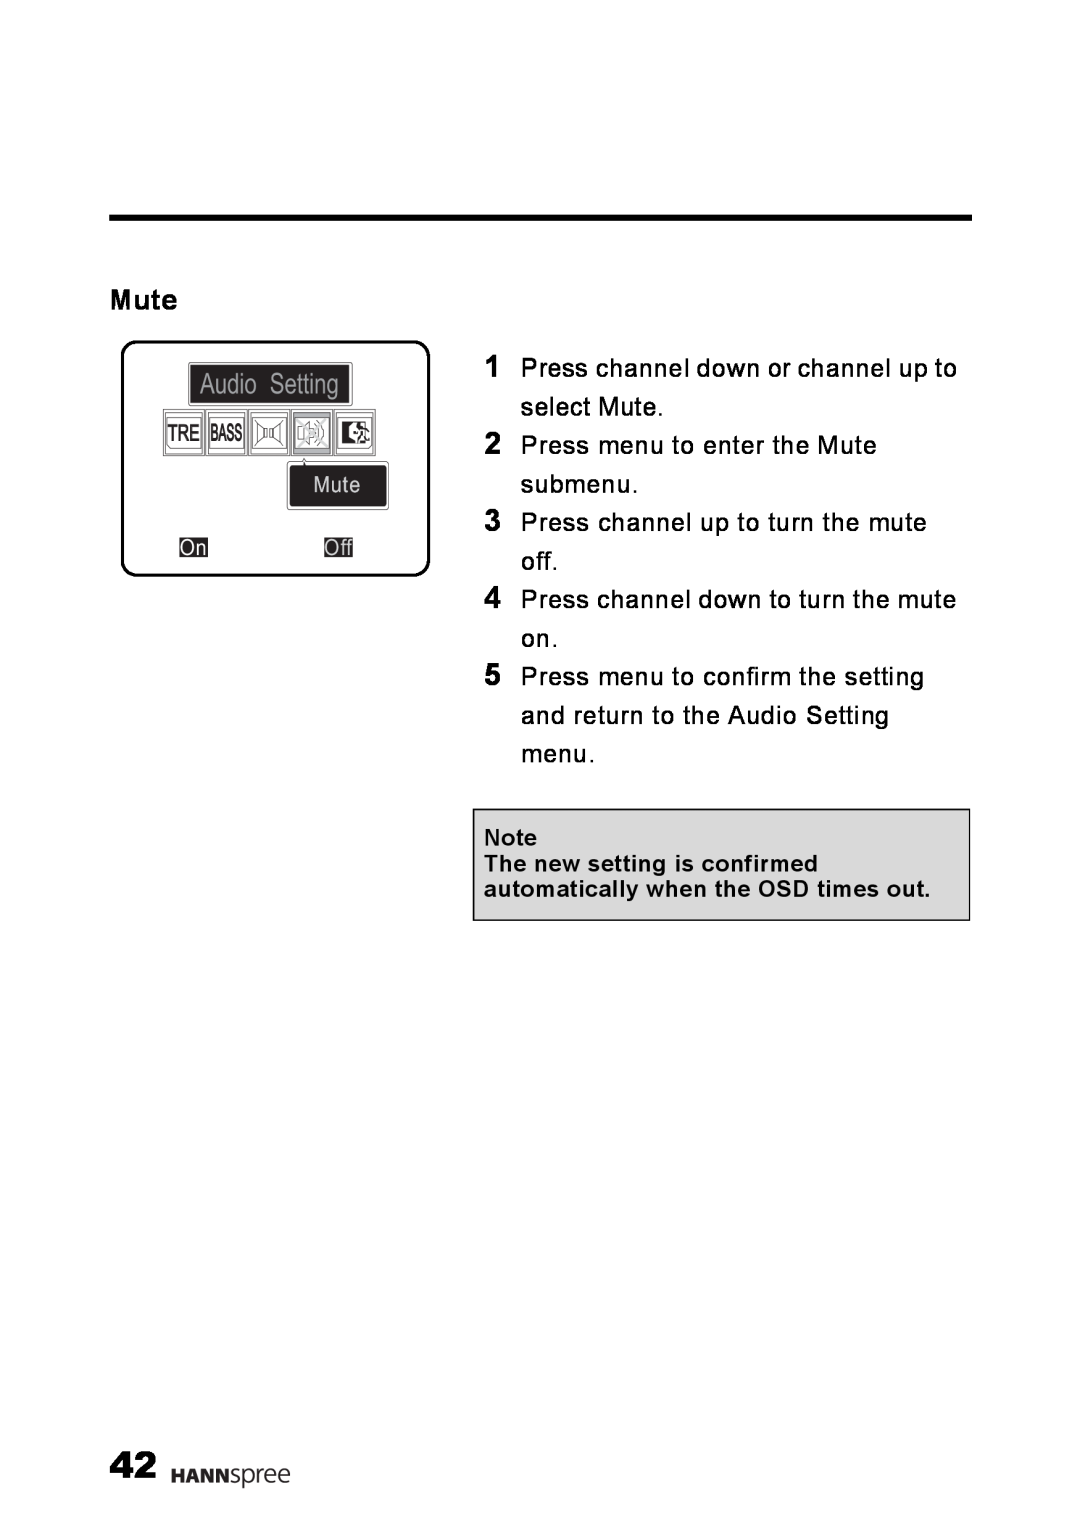 HANNspree LT02-12U1-000 user manual Mute, Audio, Setting 